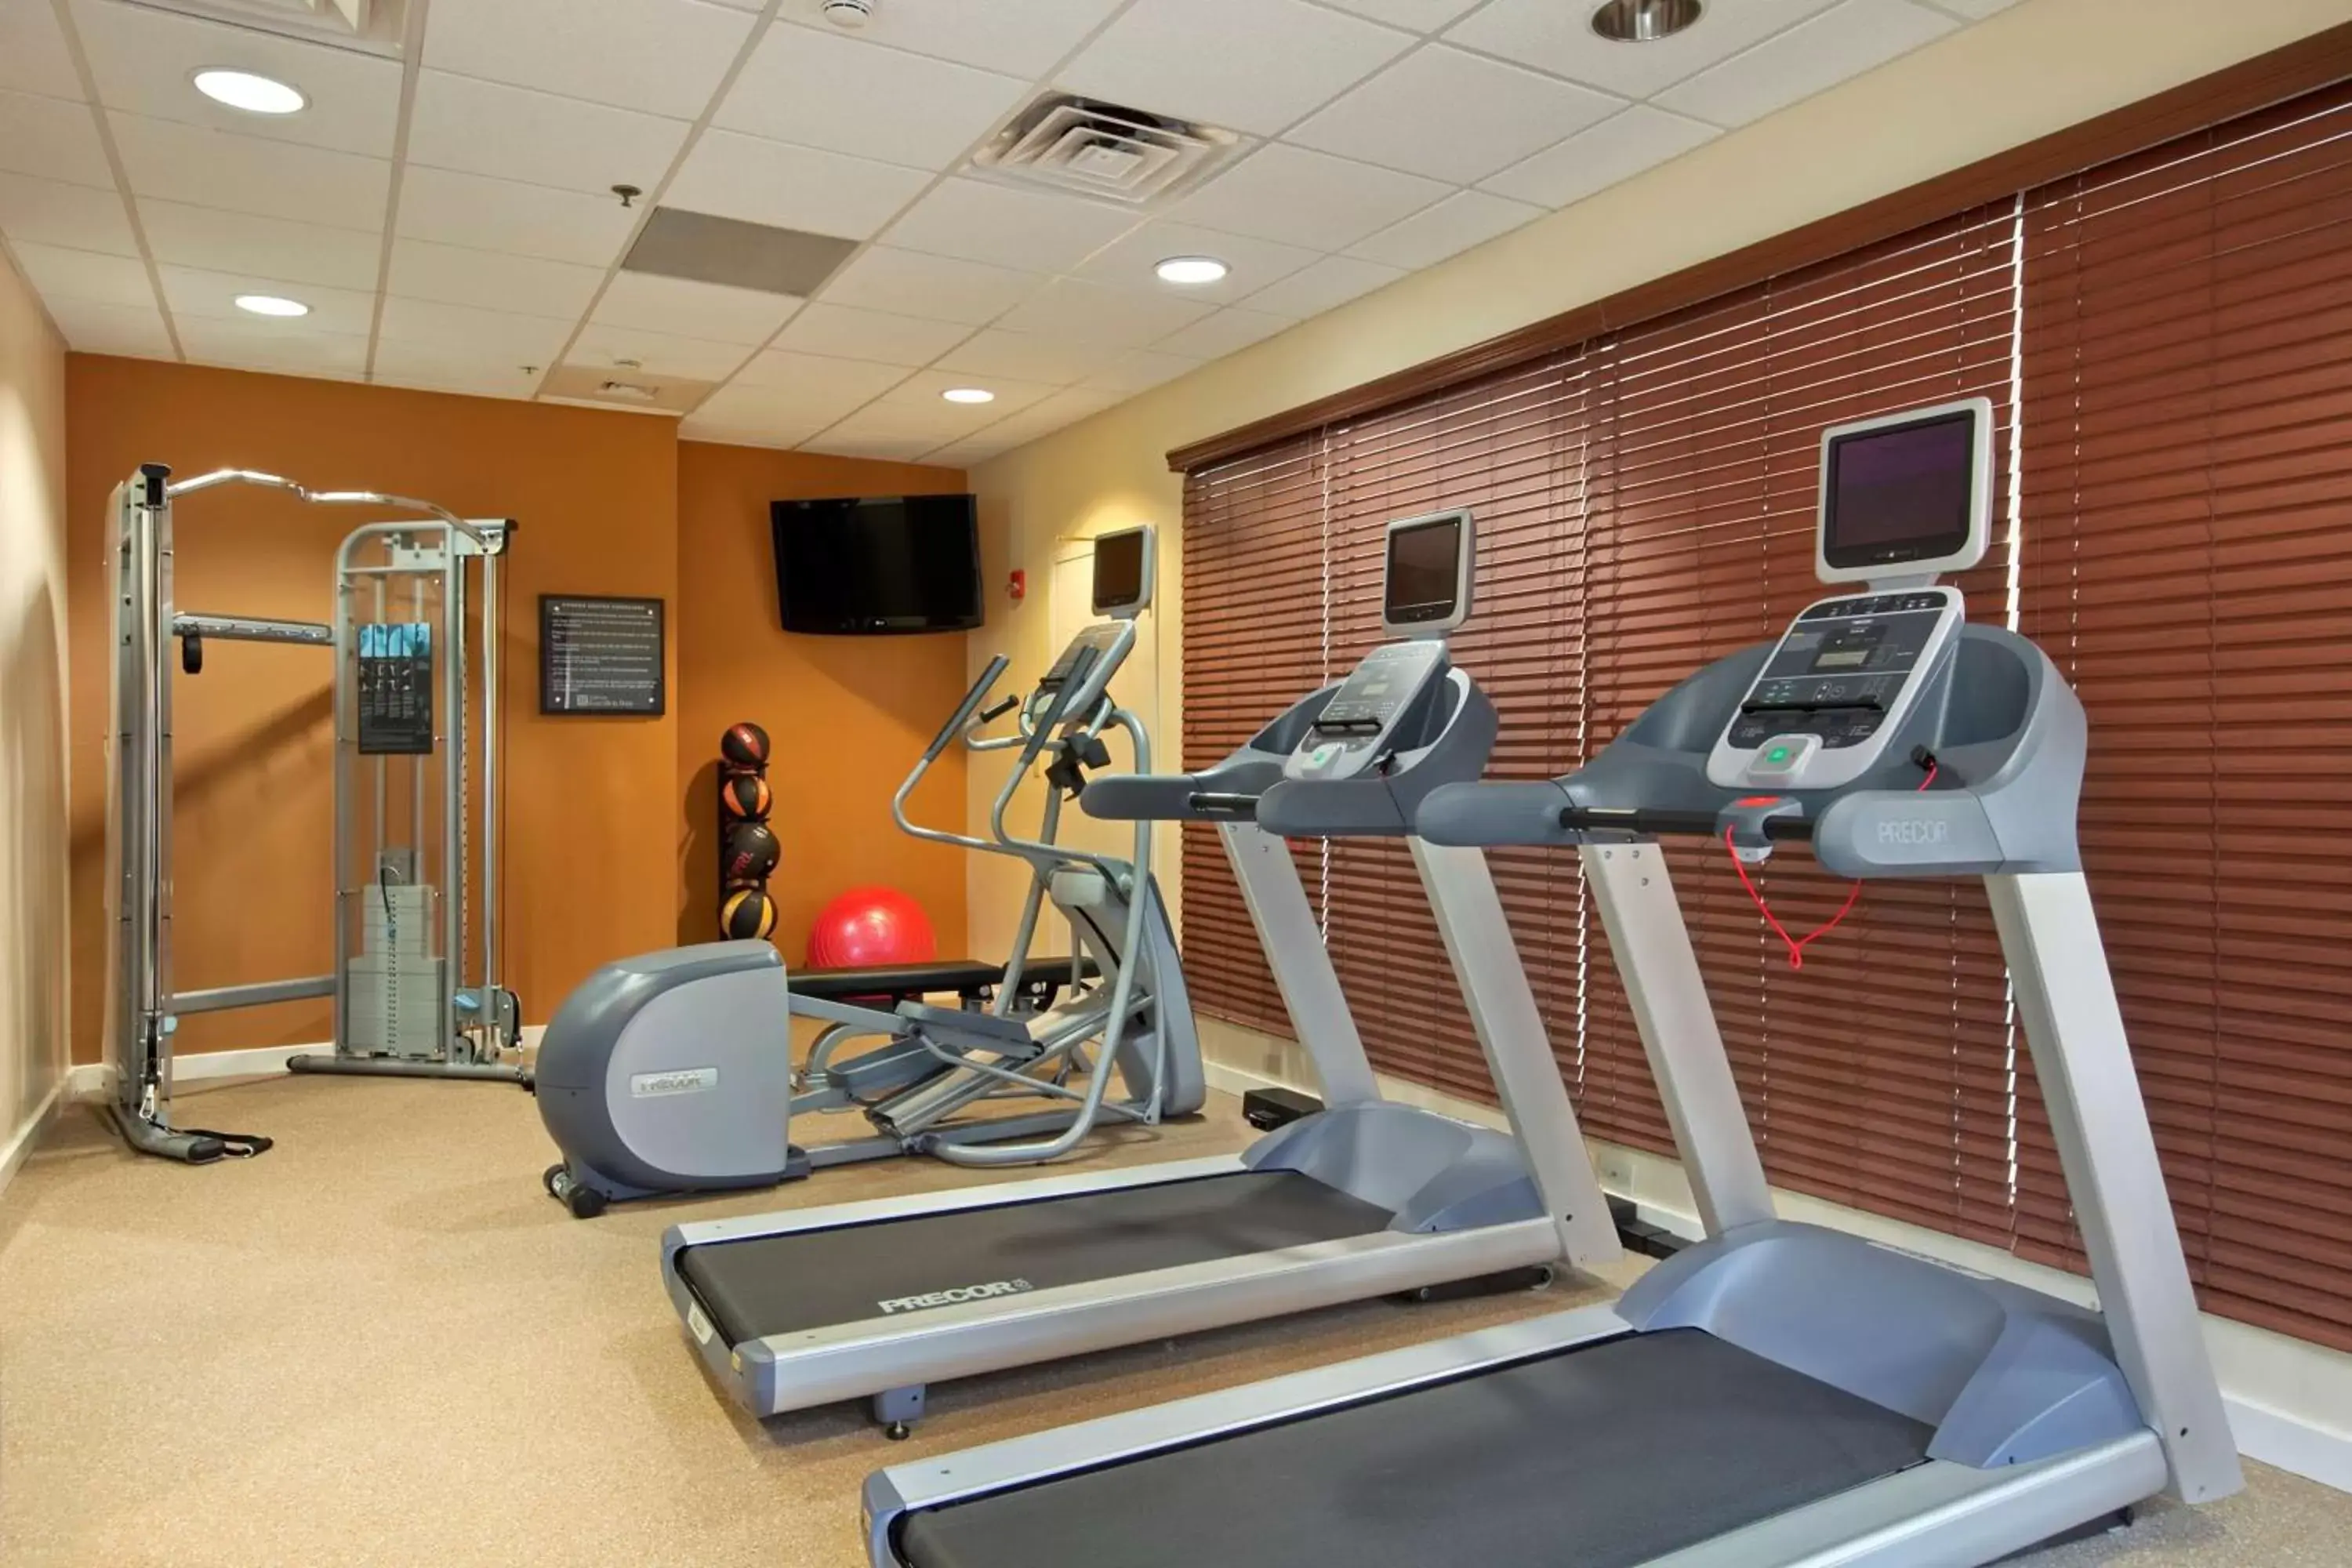 Fitness centre/facilities, Fitness Center/Facilities in Hilton Garden Inn Hoffman Estates